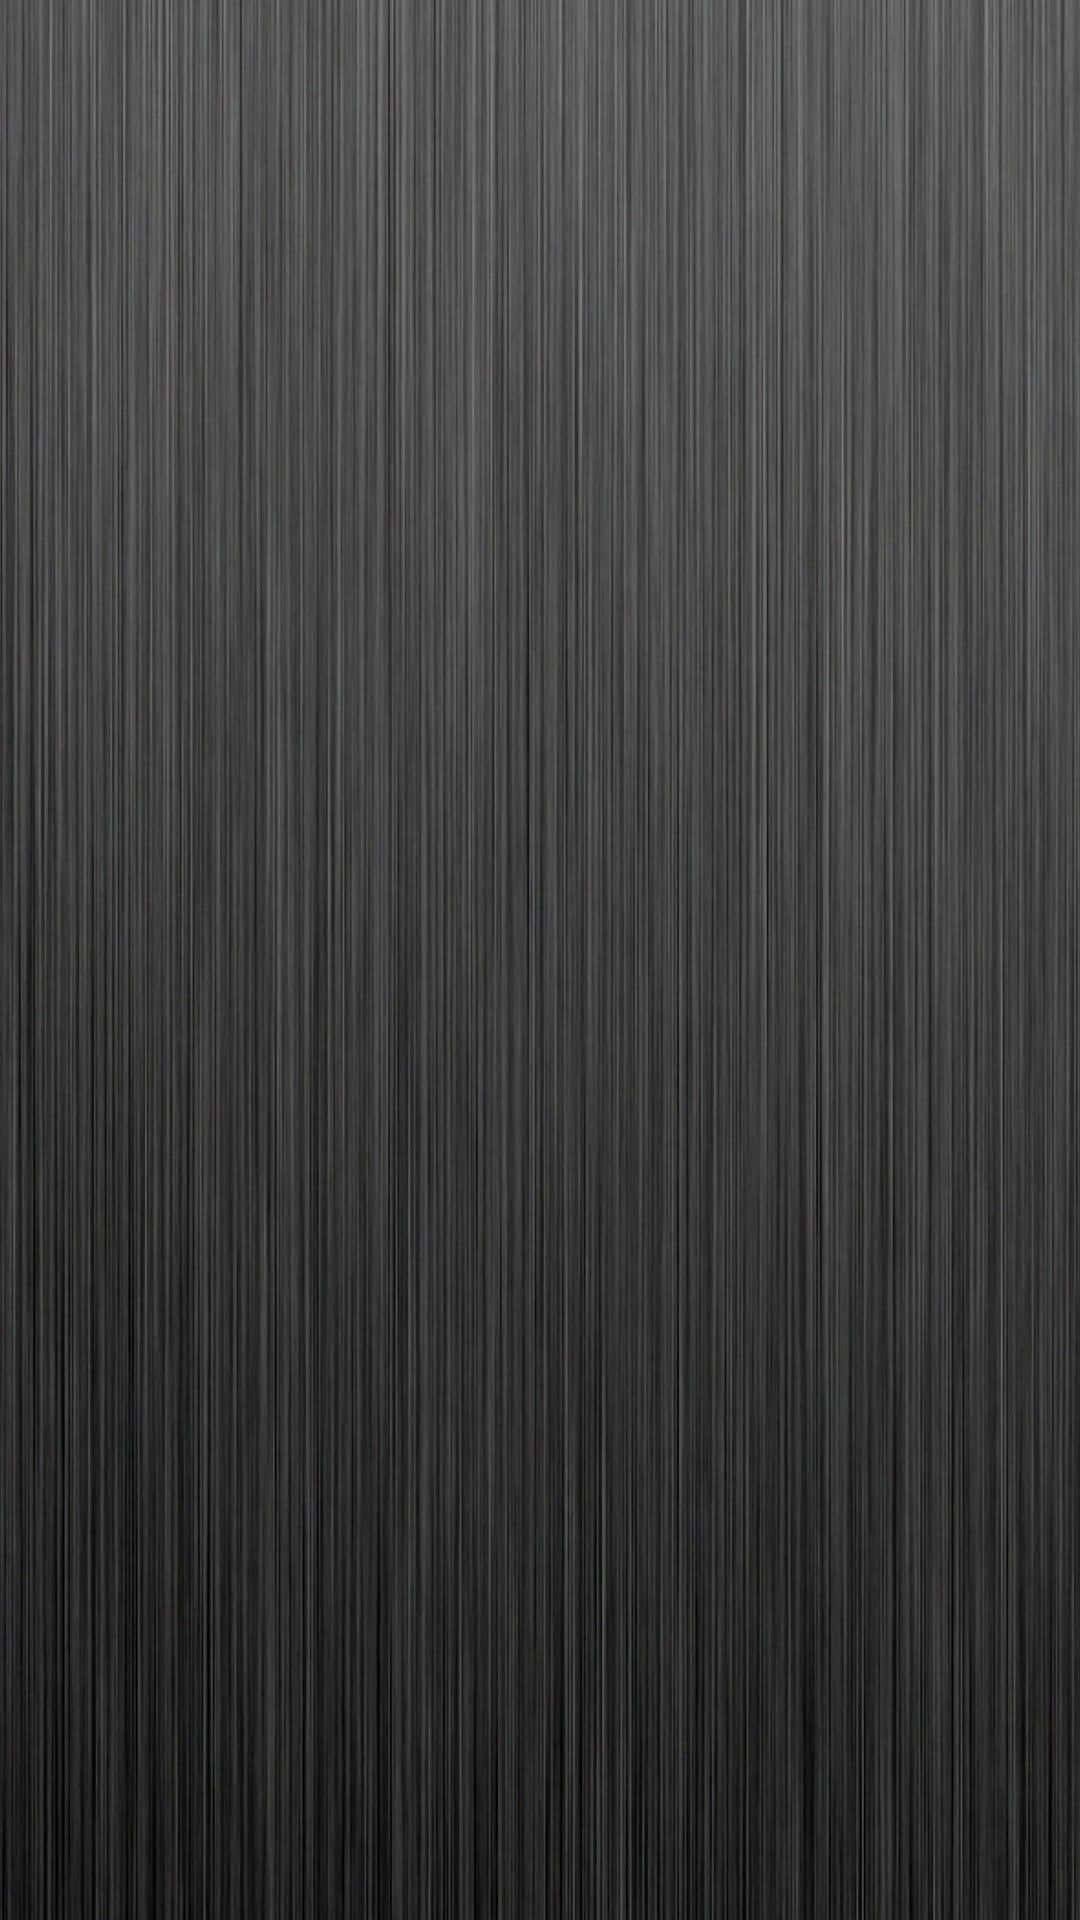 Minimalist Solid Grey Background